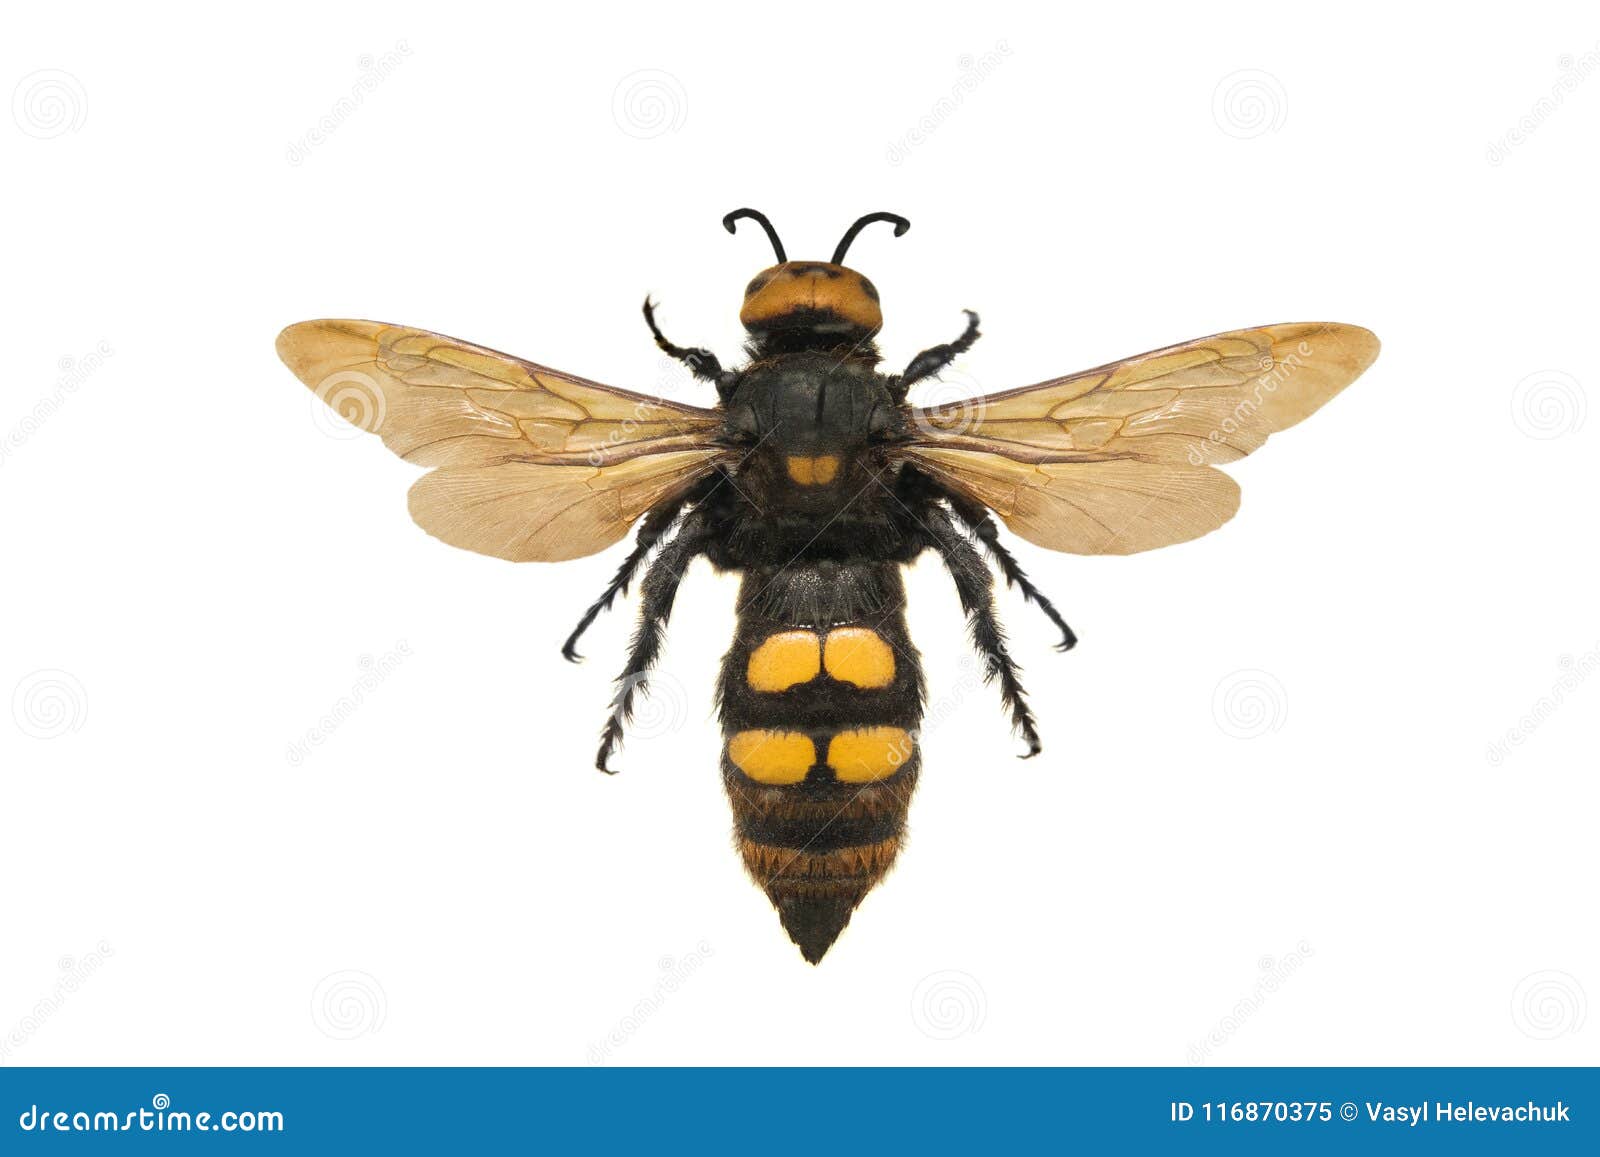 Scolia-flavifrons stockbild. Bild von insekt, schwarzes - 116870375